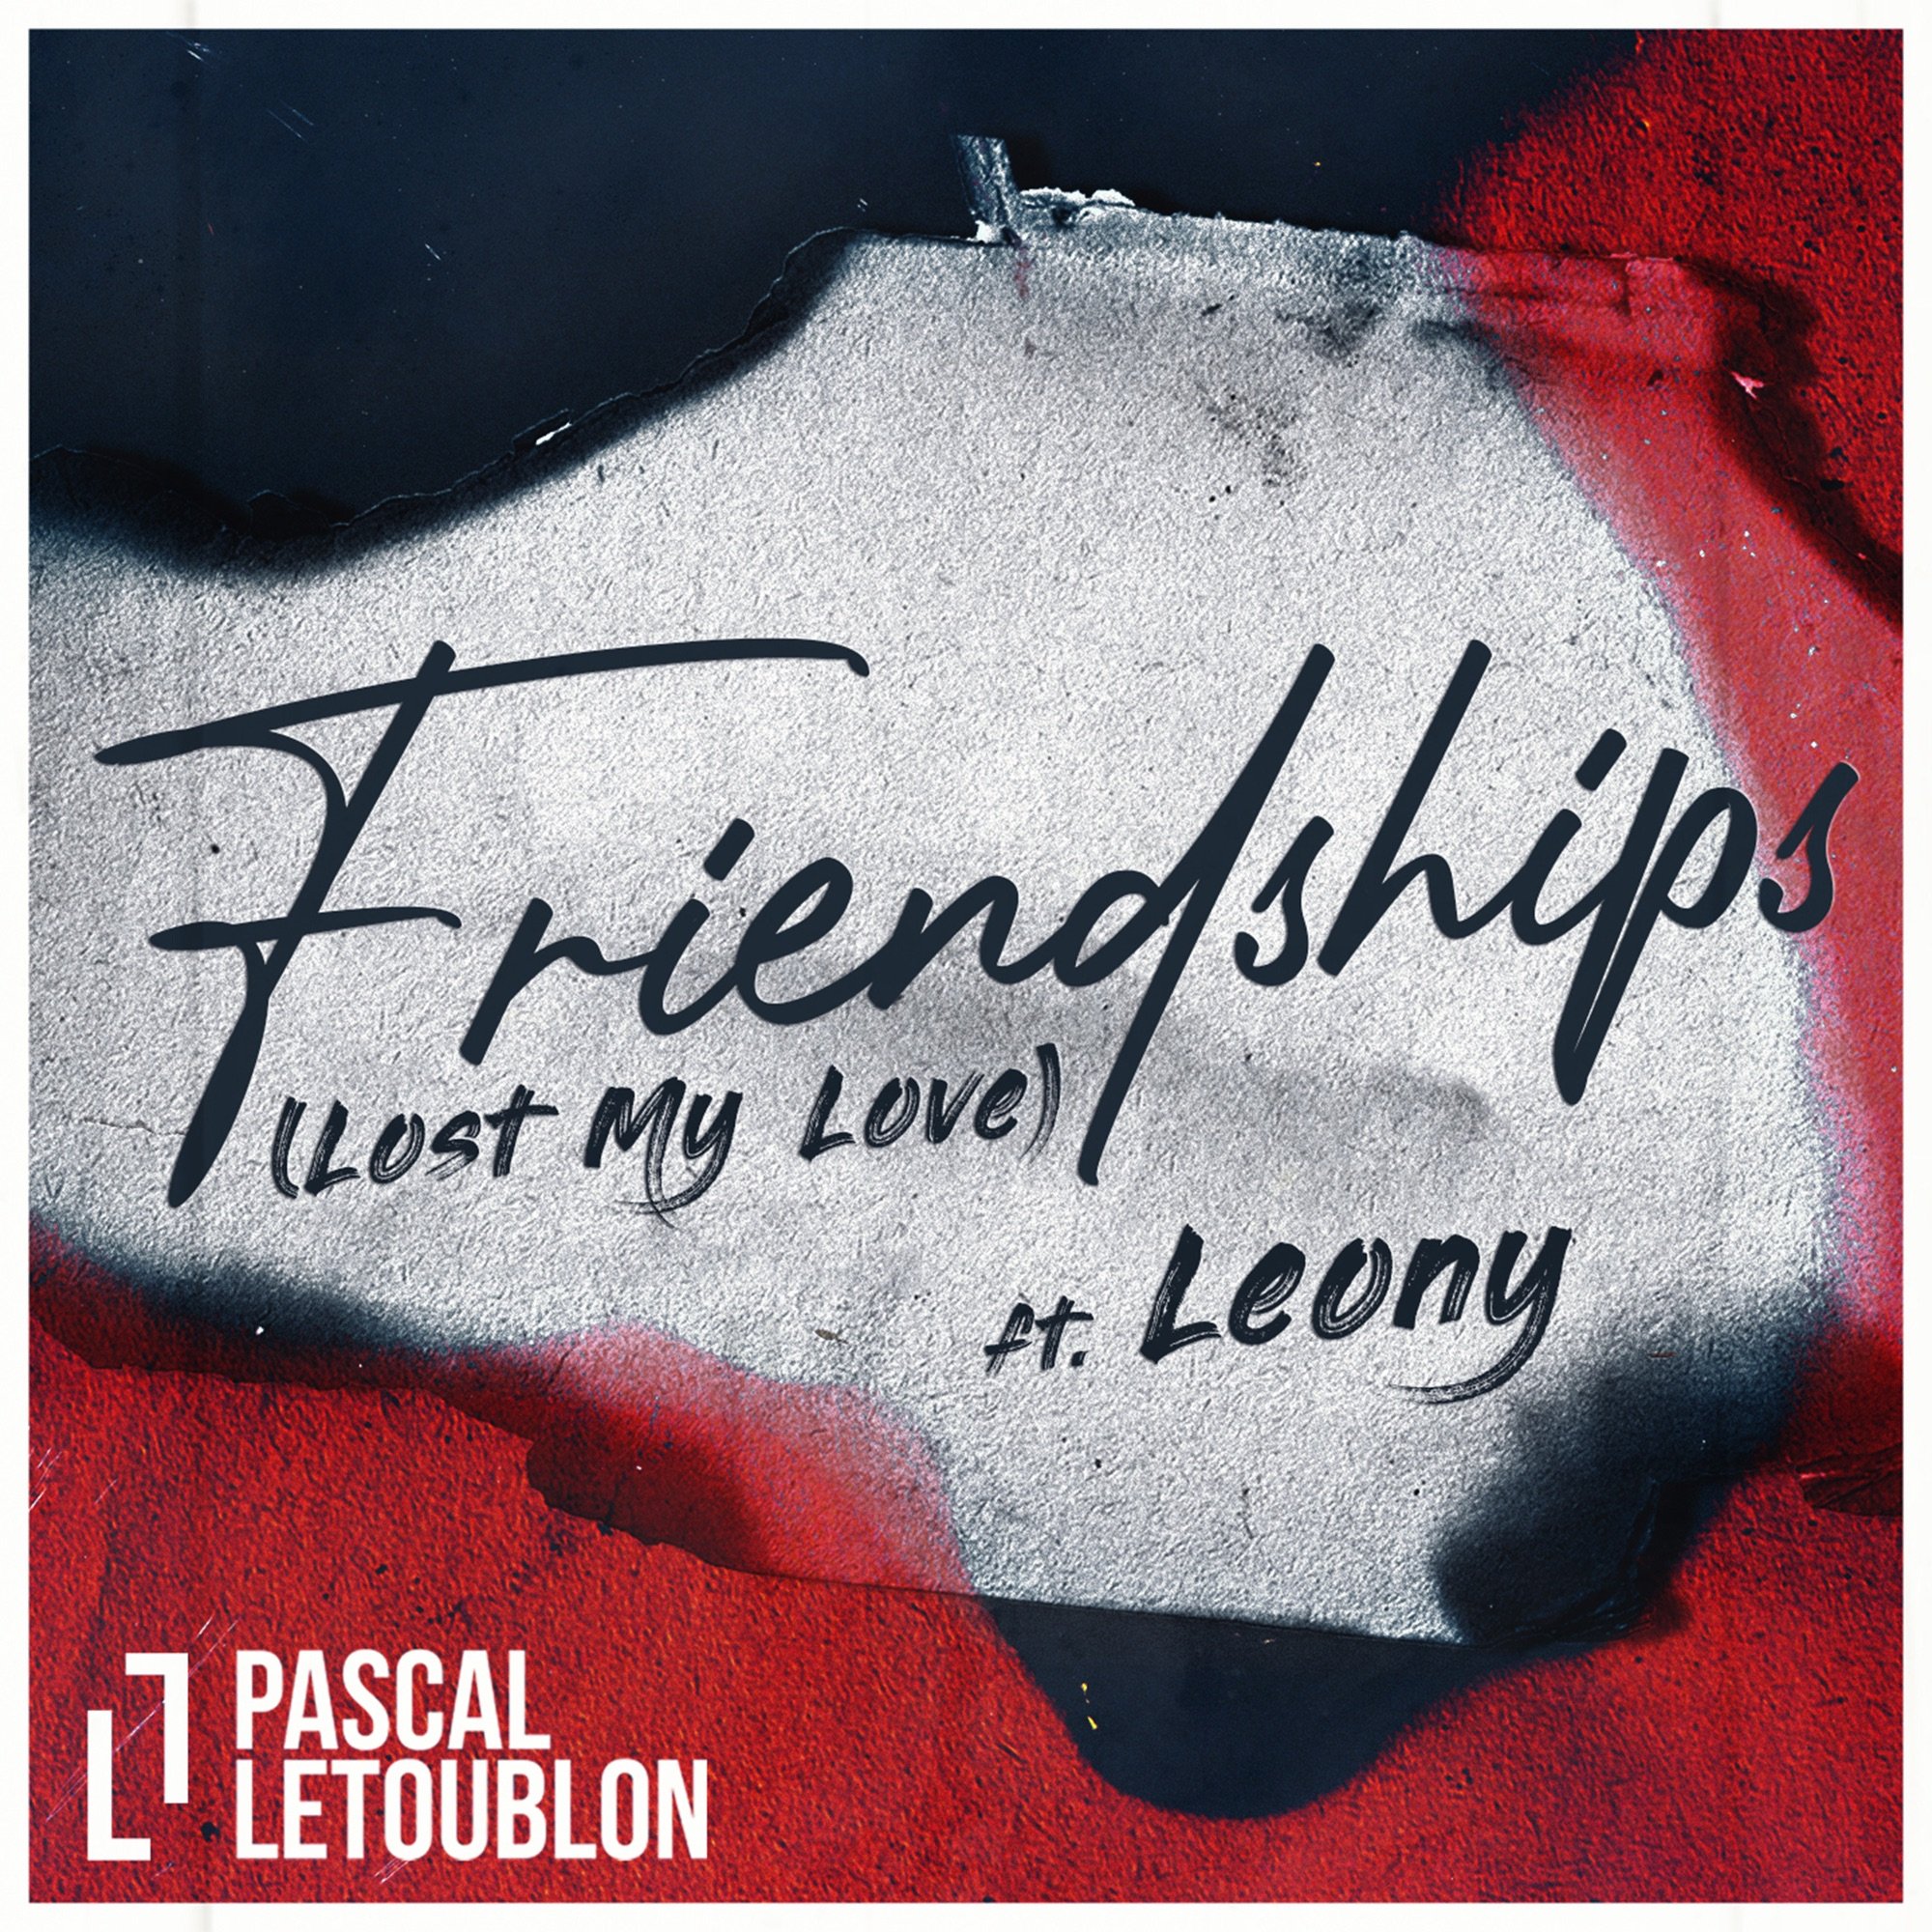 Pascal leony friendships